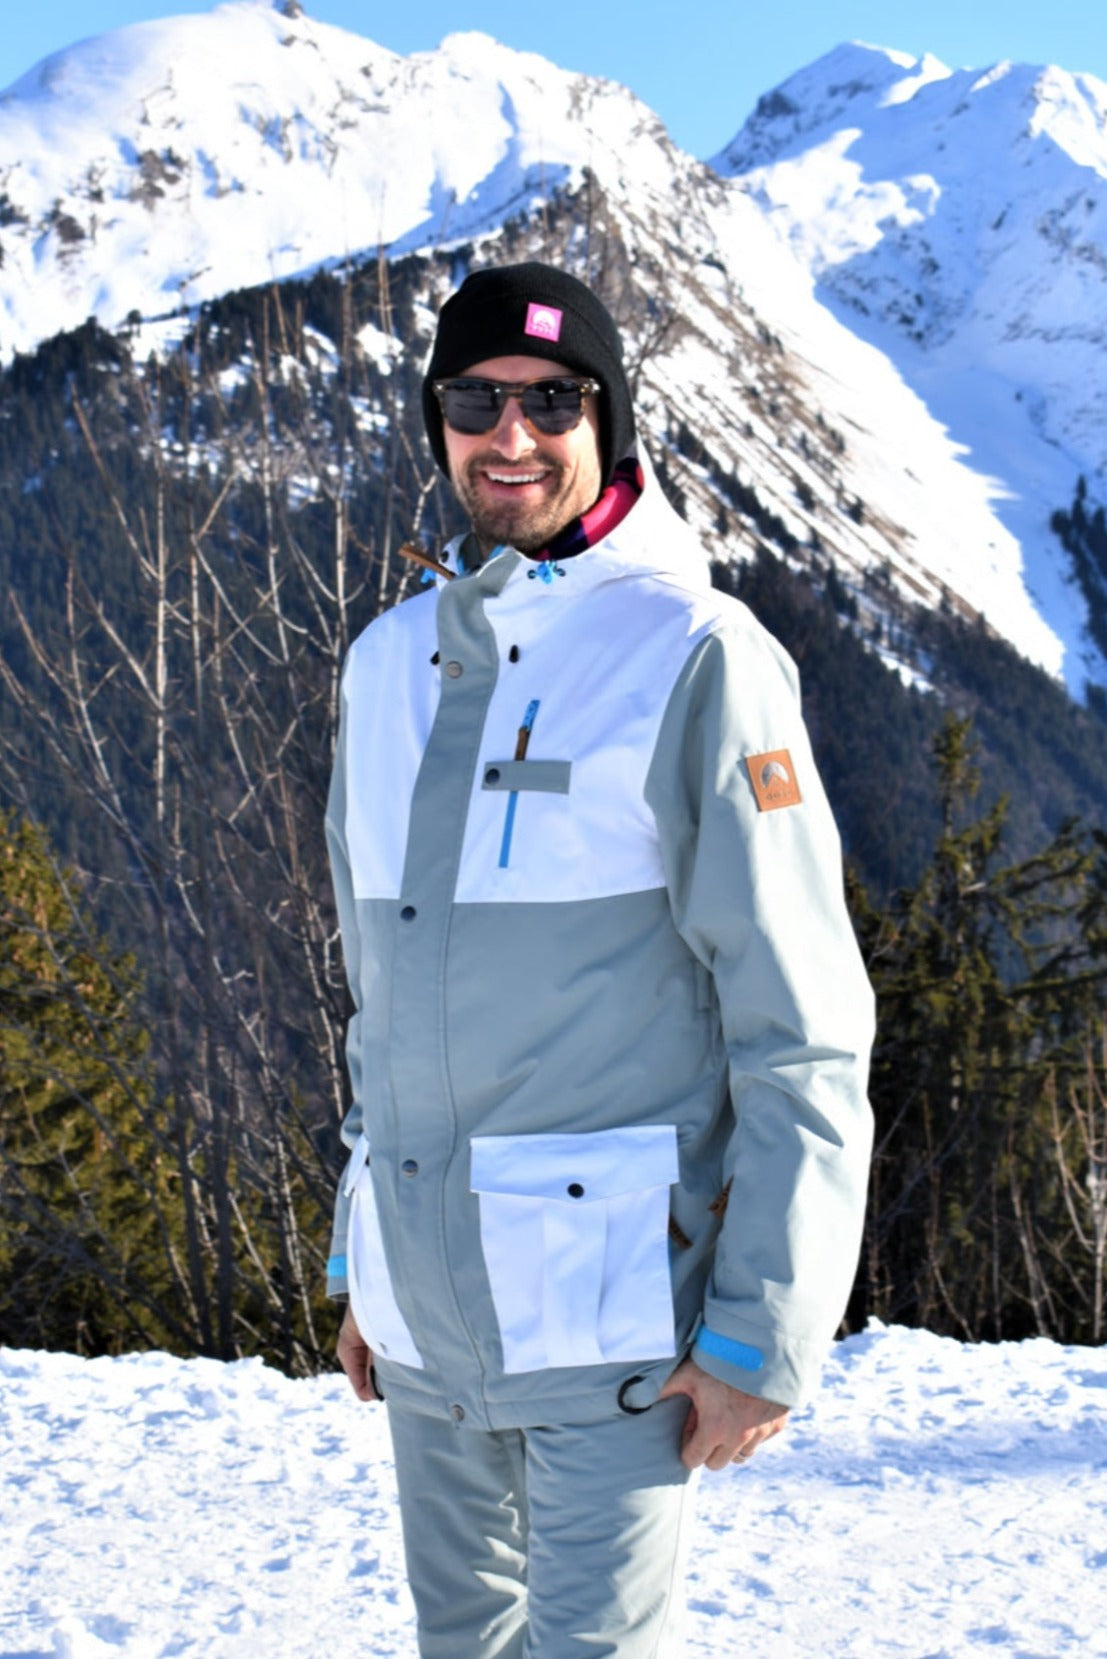 Mens Ski Jacket - White, Grey (front)